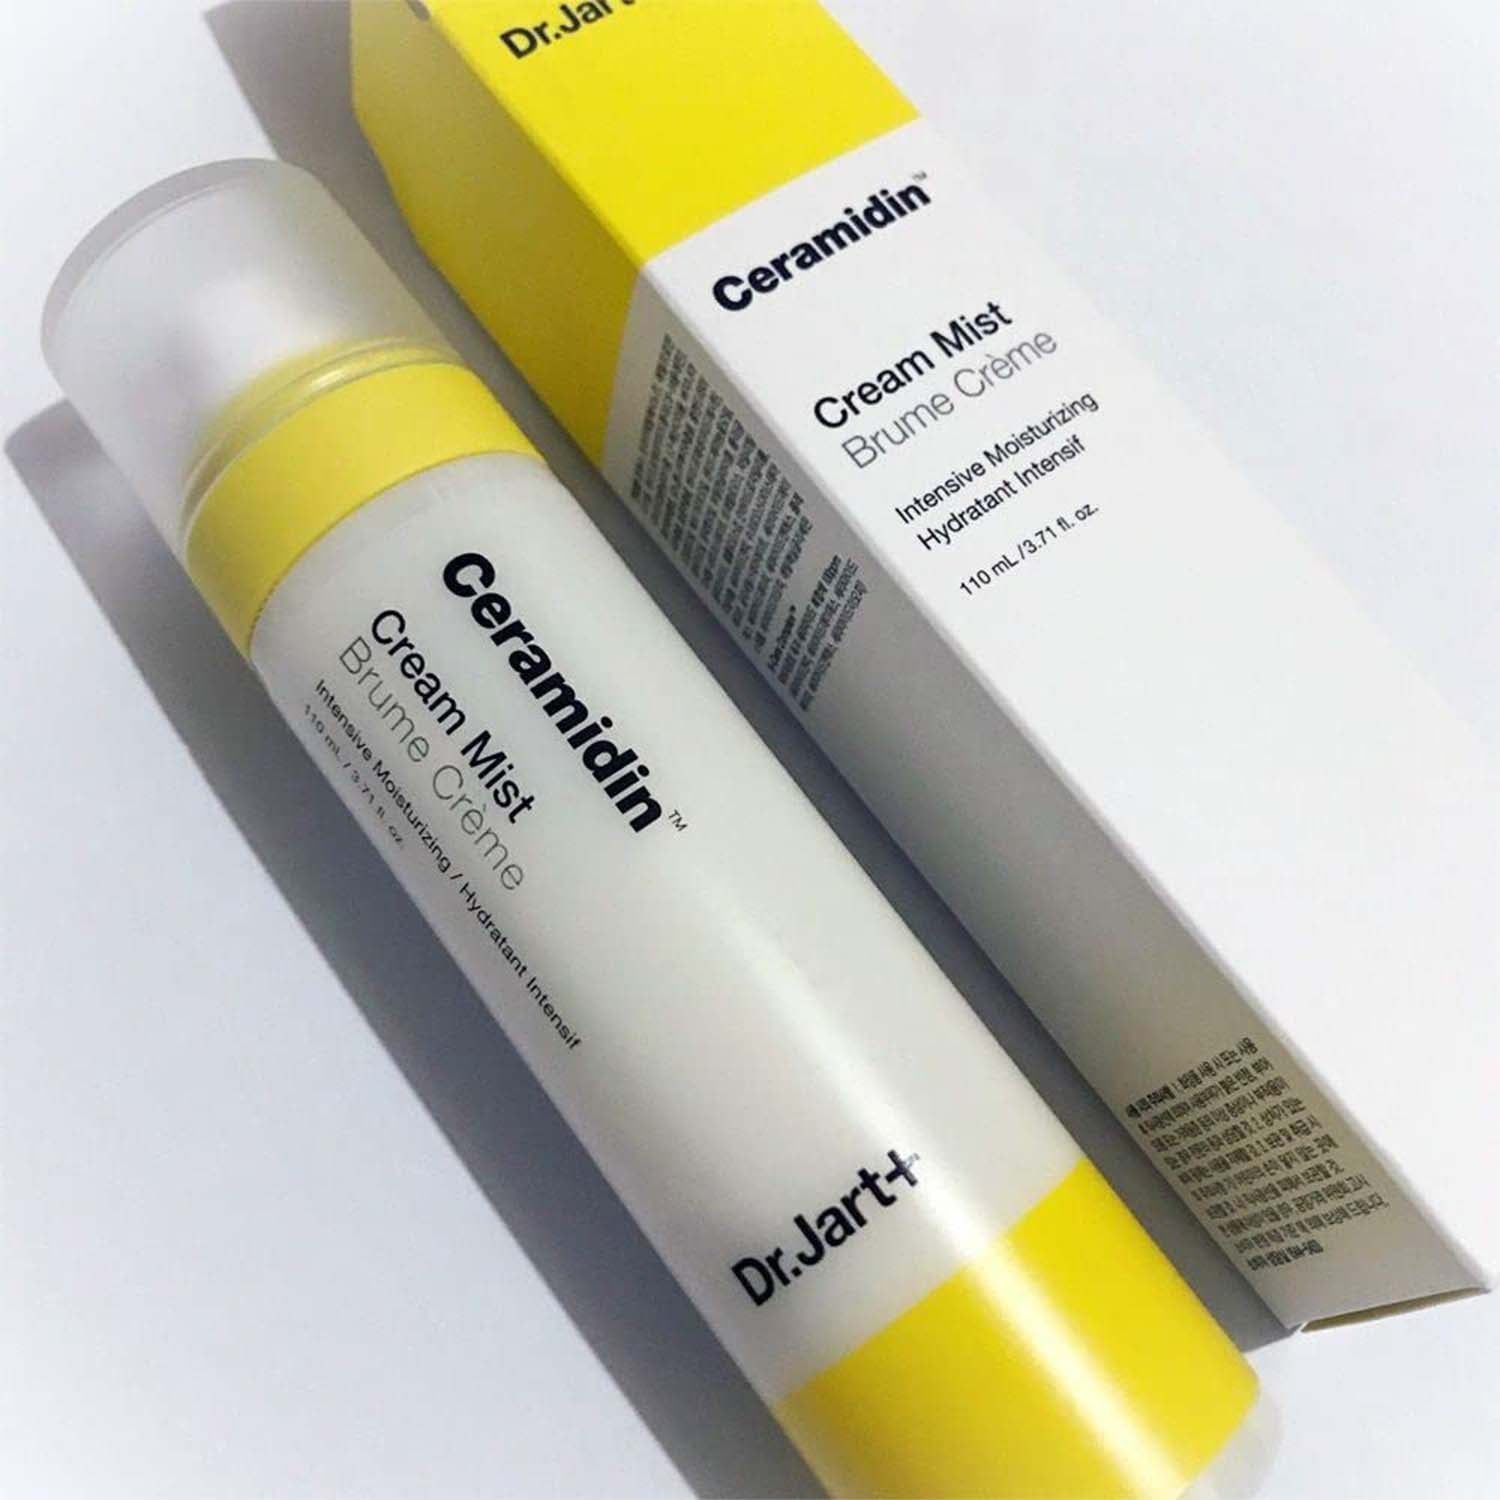 Dr. Jart+ - Ceramidin Cream Mist